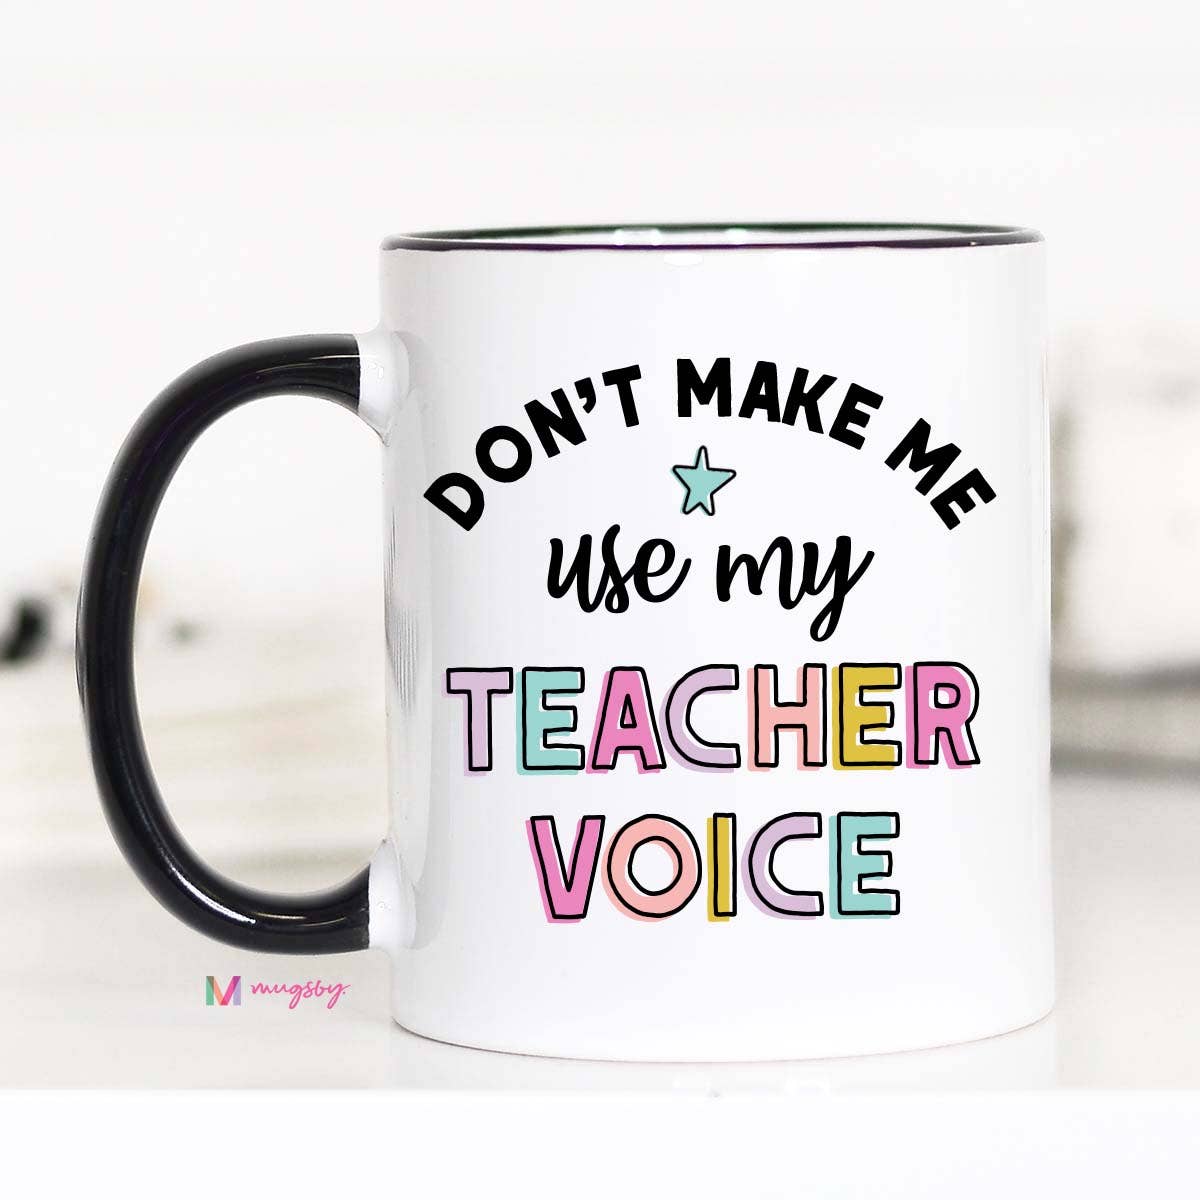 Don't Make Me Use my Teacher Voice Coffee Mug, Teacher gifts